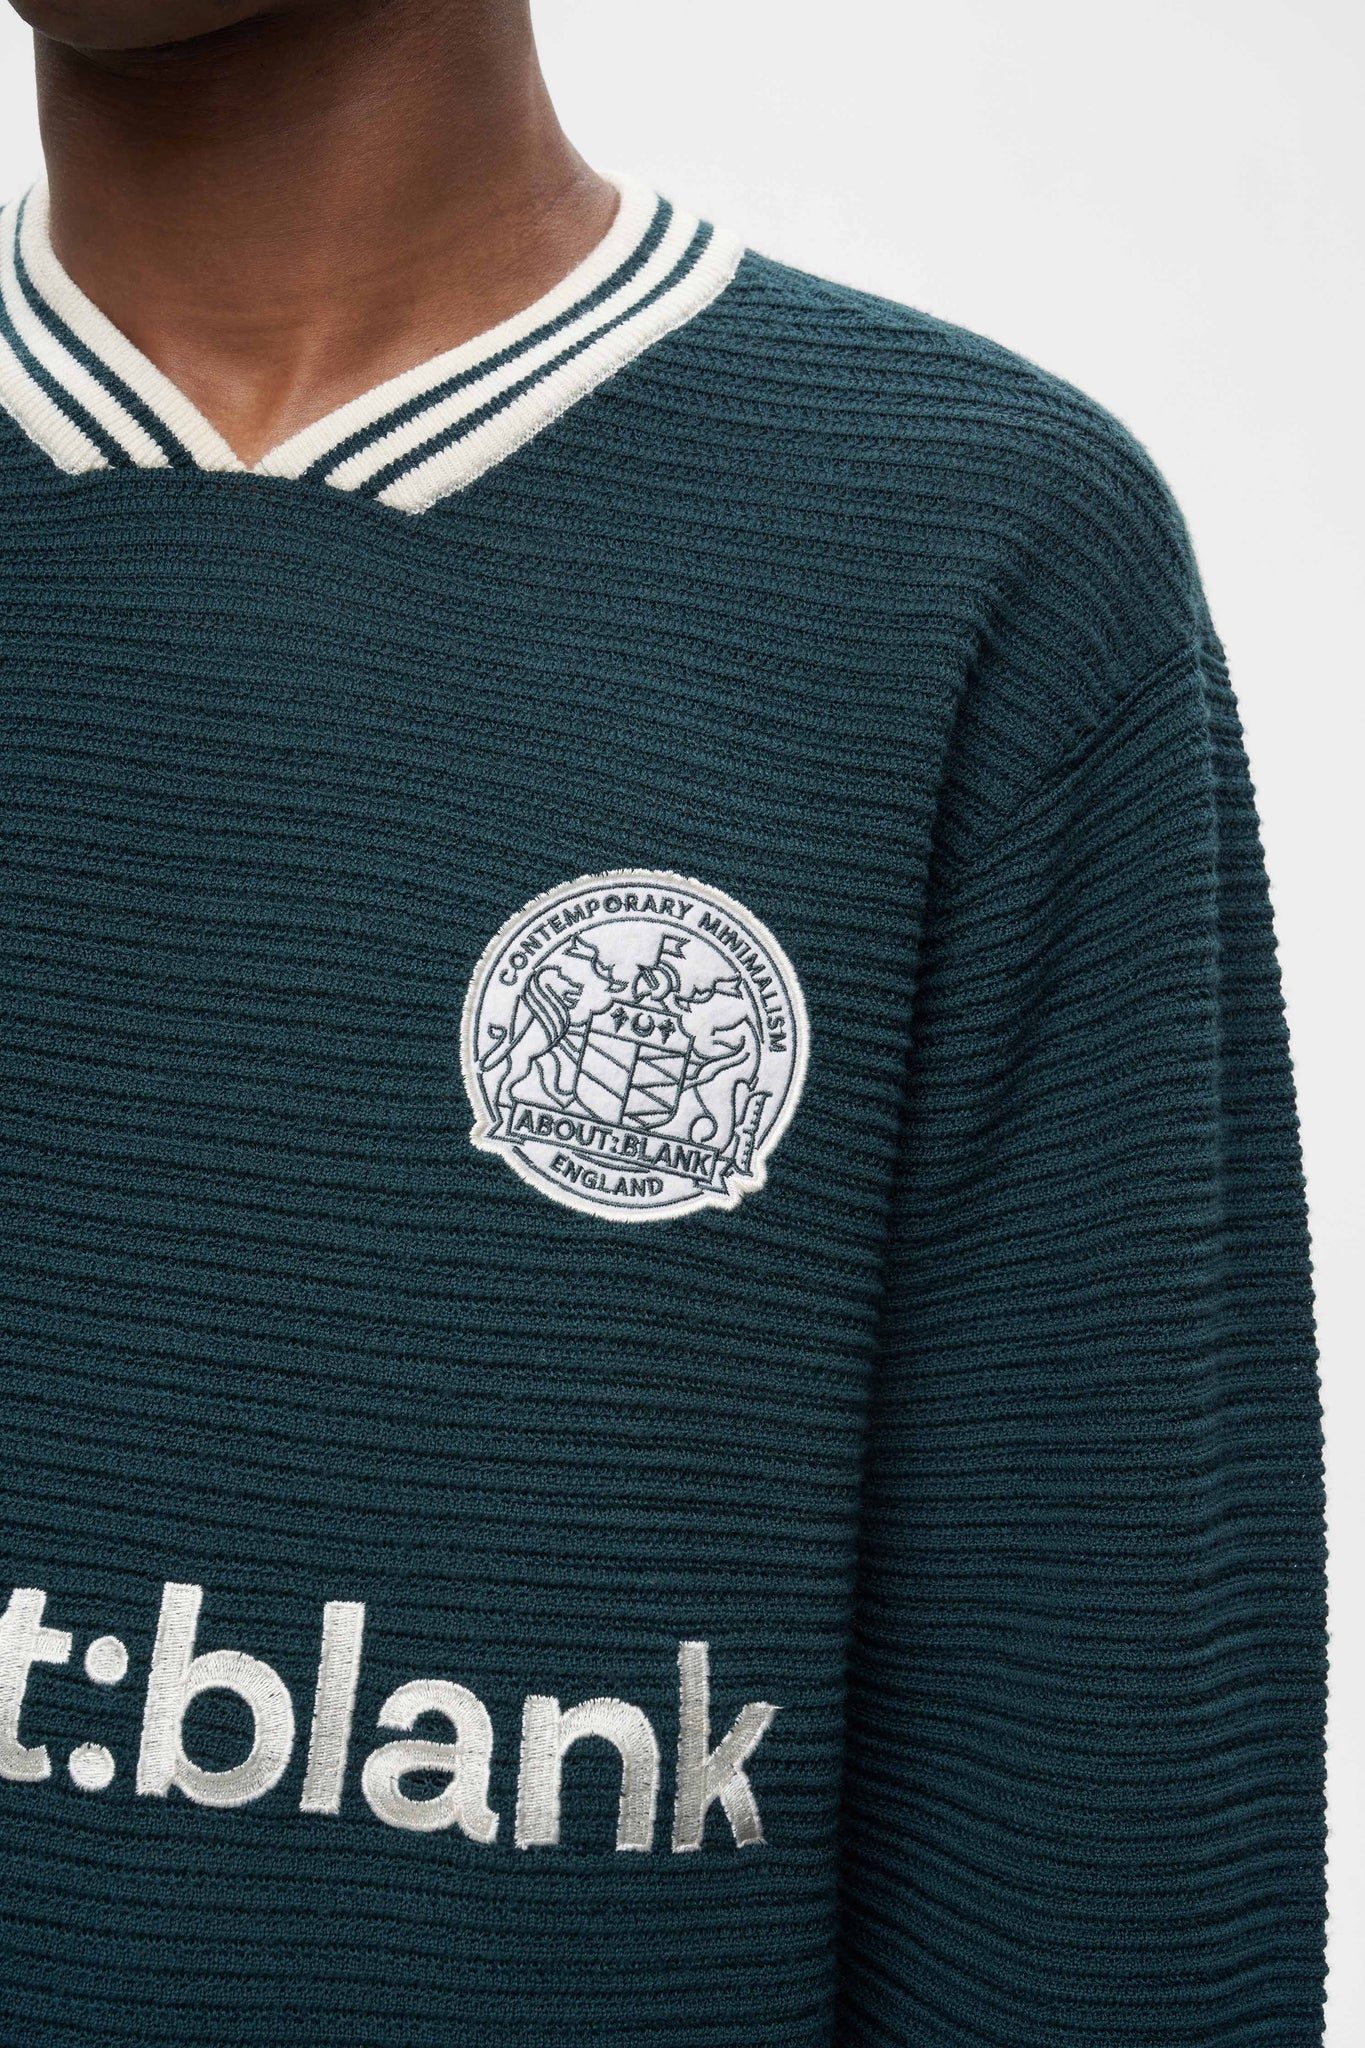 knitted football shirt epsom green/ecru